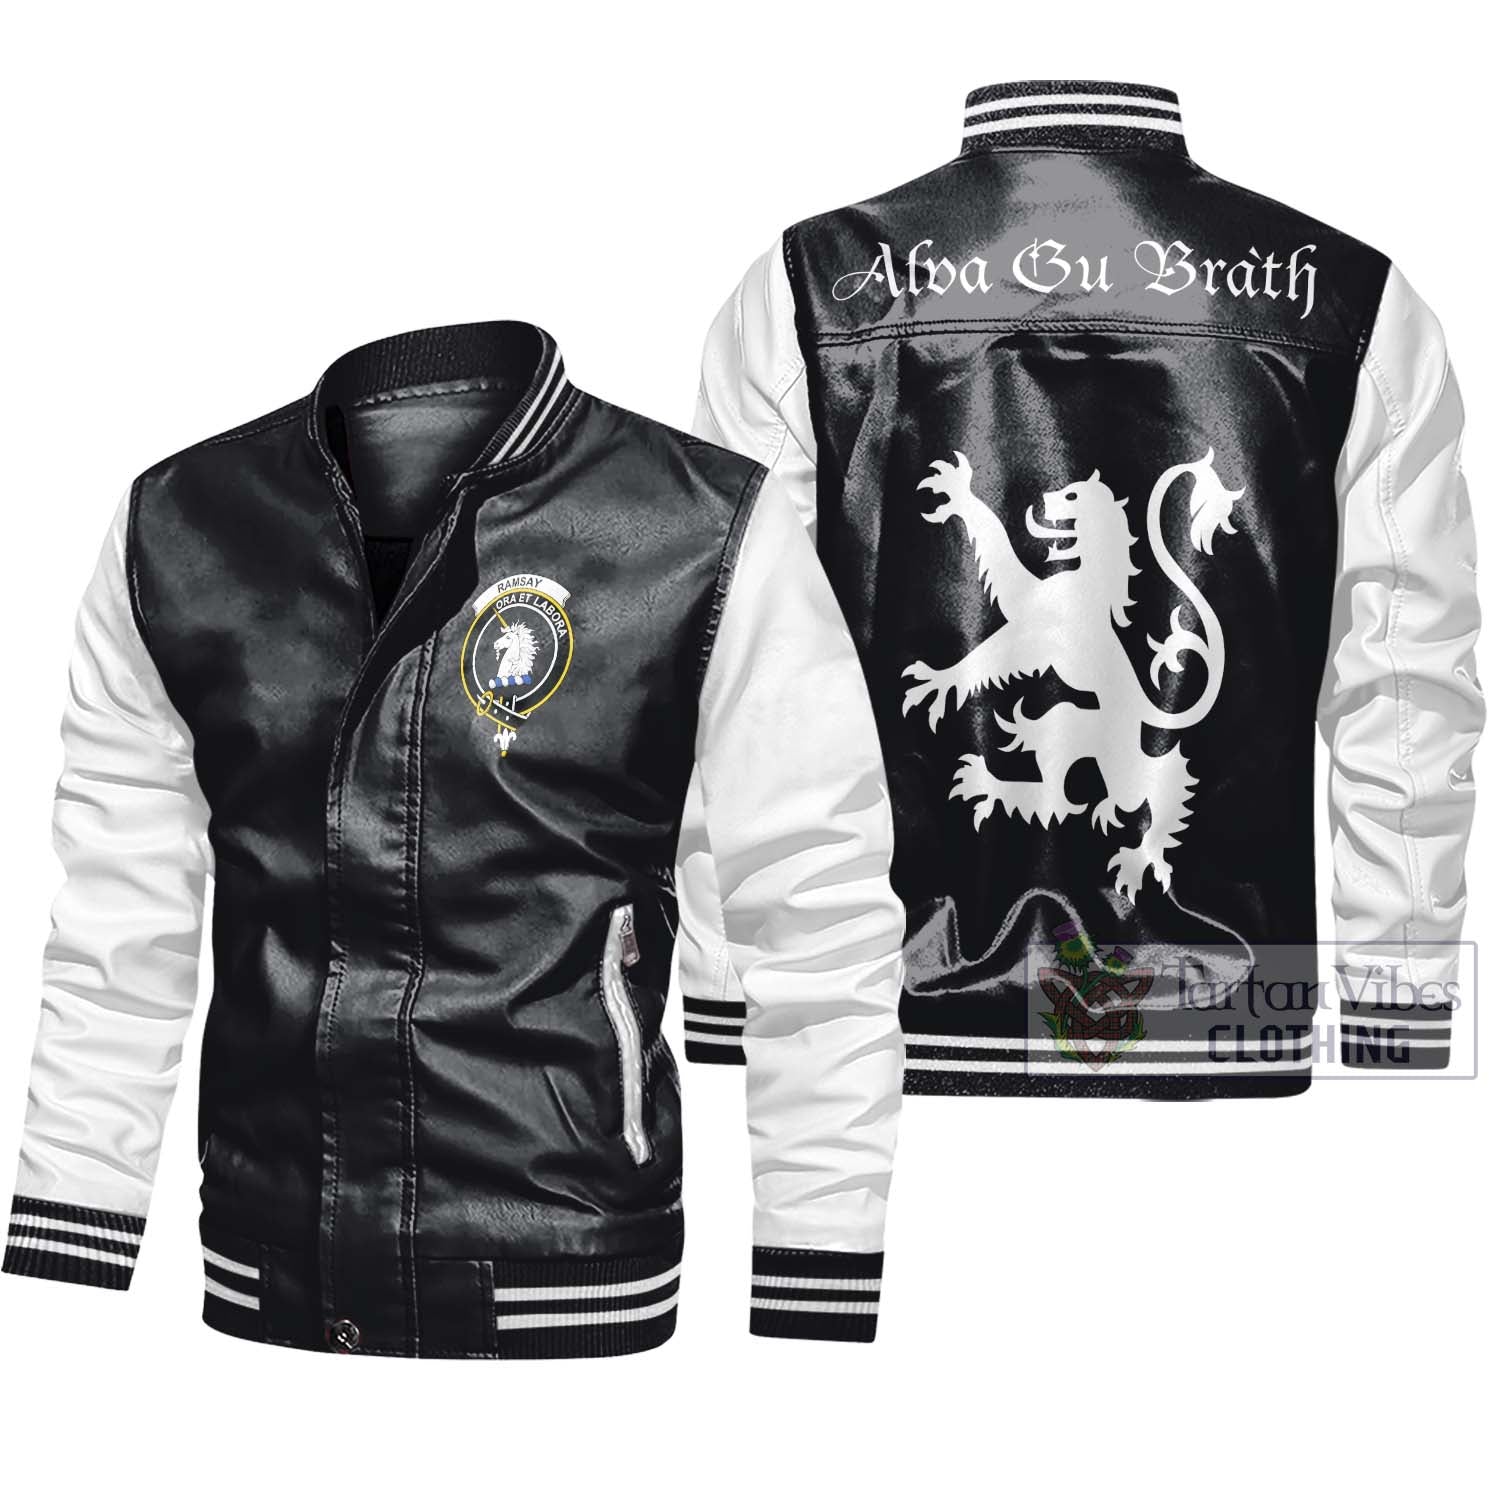 Tartan Vibes Clothing Ramsay Family Crest Leather Bomber Jacket Lion Rampant Alba Gu Brath Style